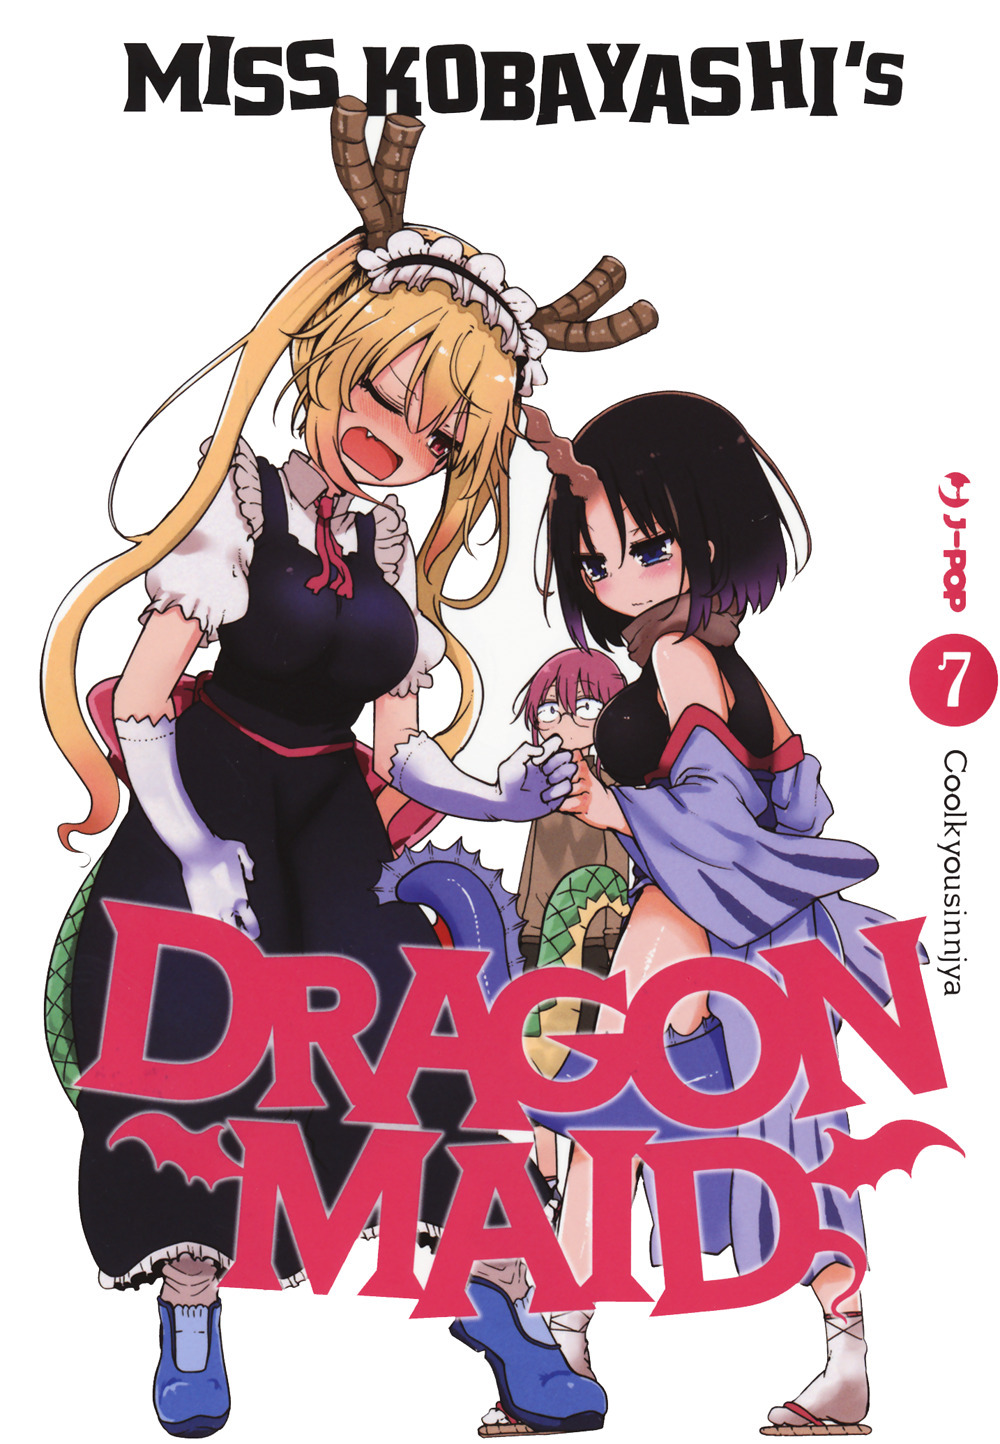 Miss Kobayashi's dragon maid. Vol. 7